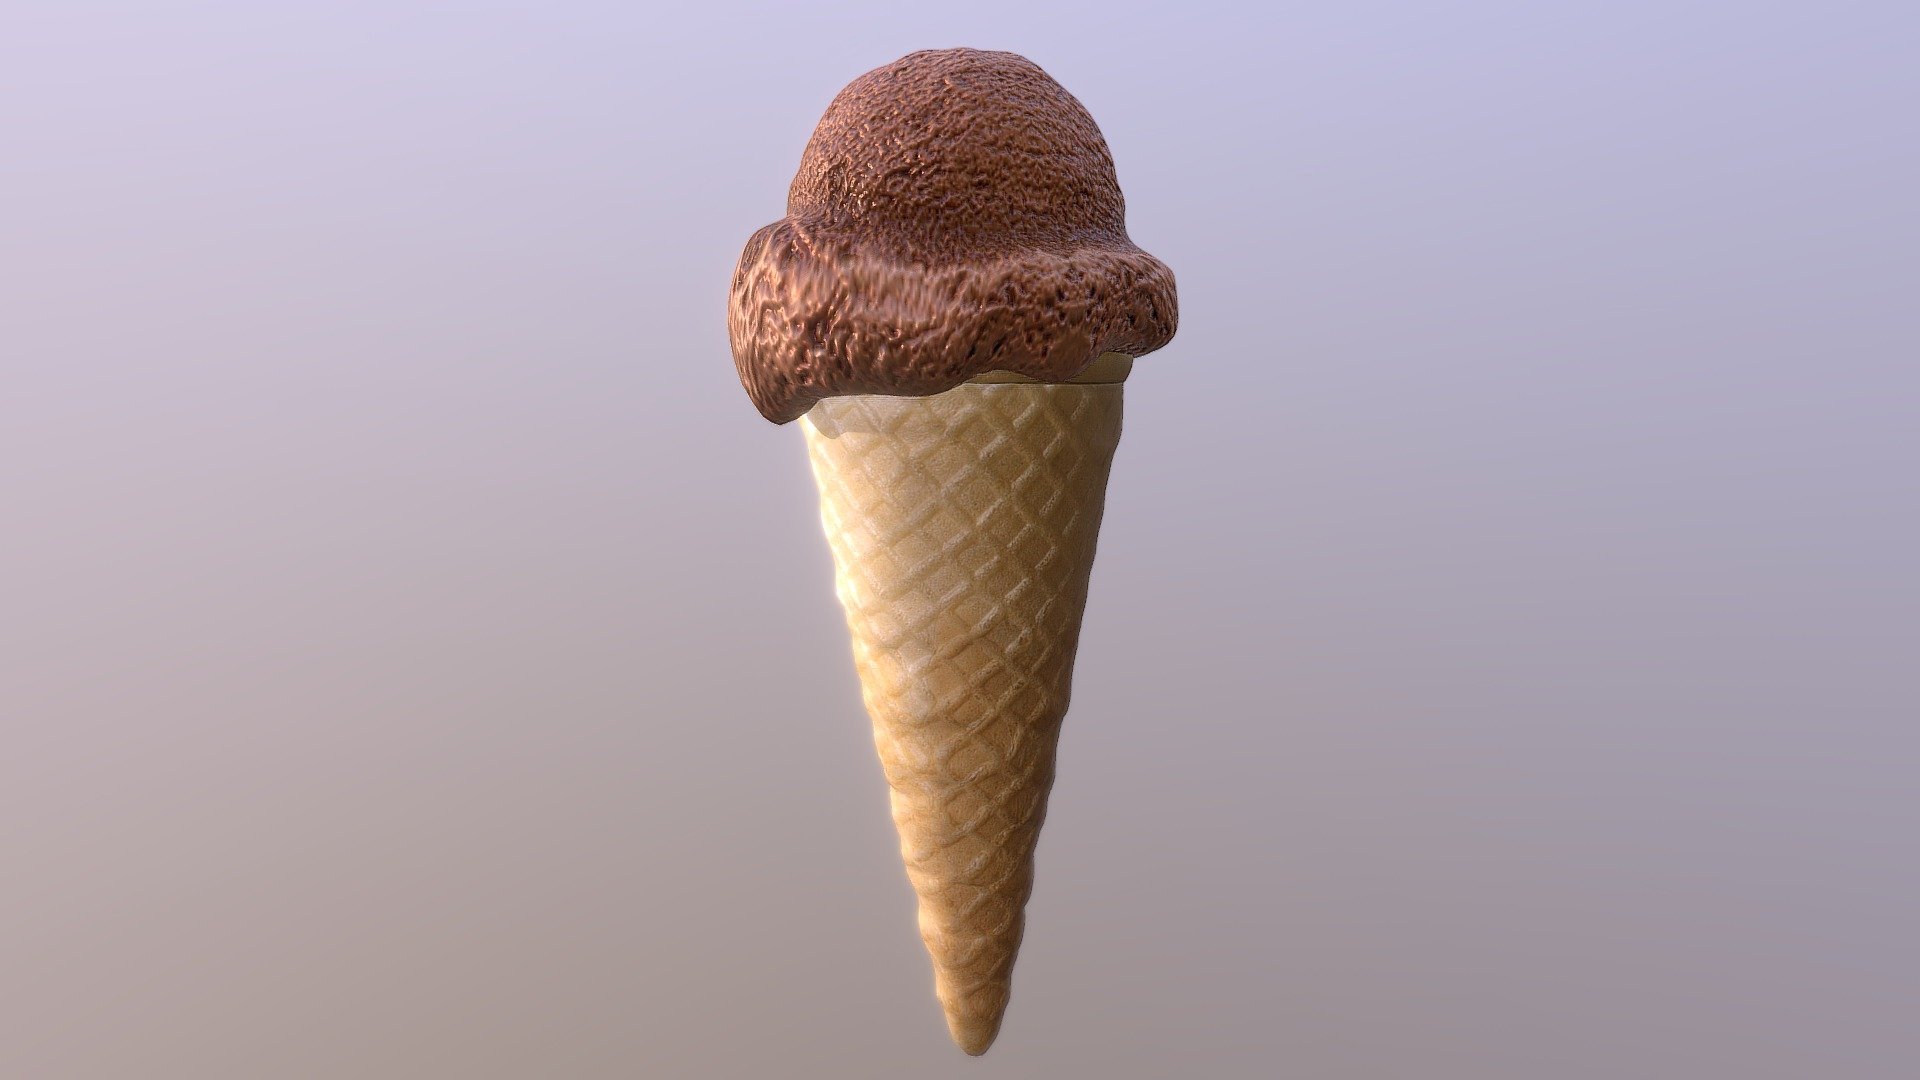 Chocolate Ice Cream Cone